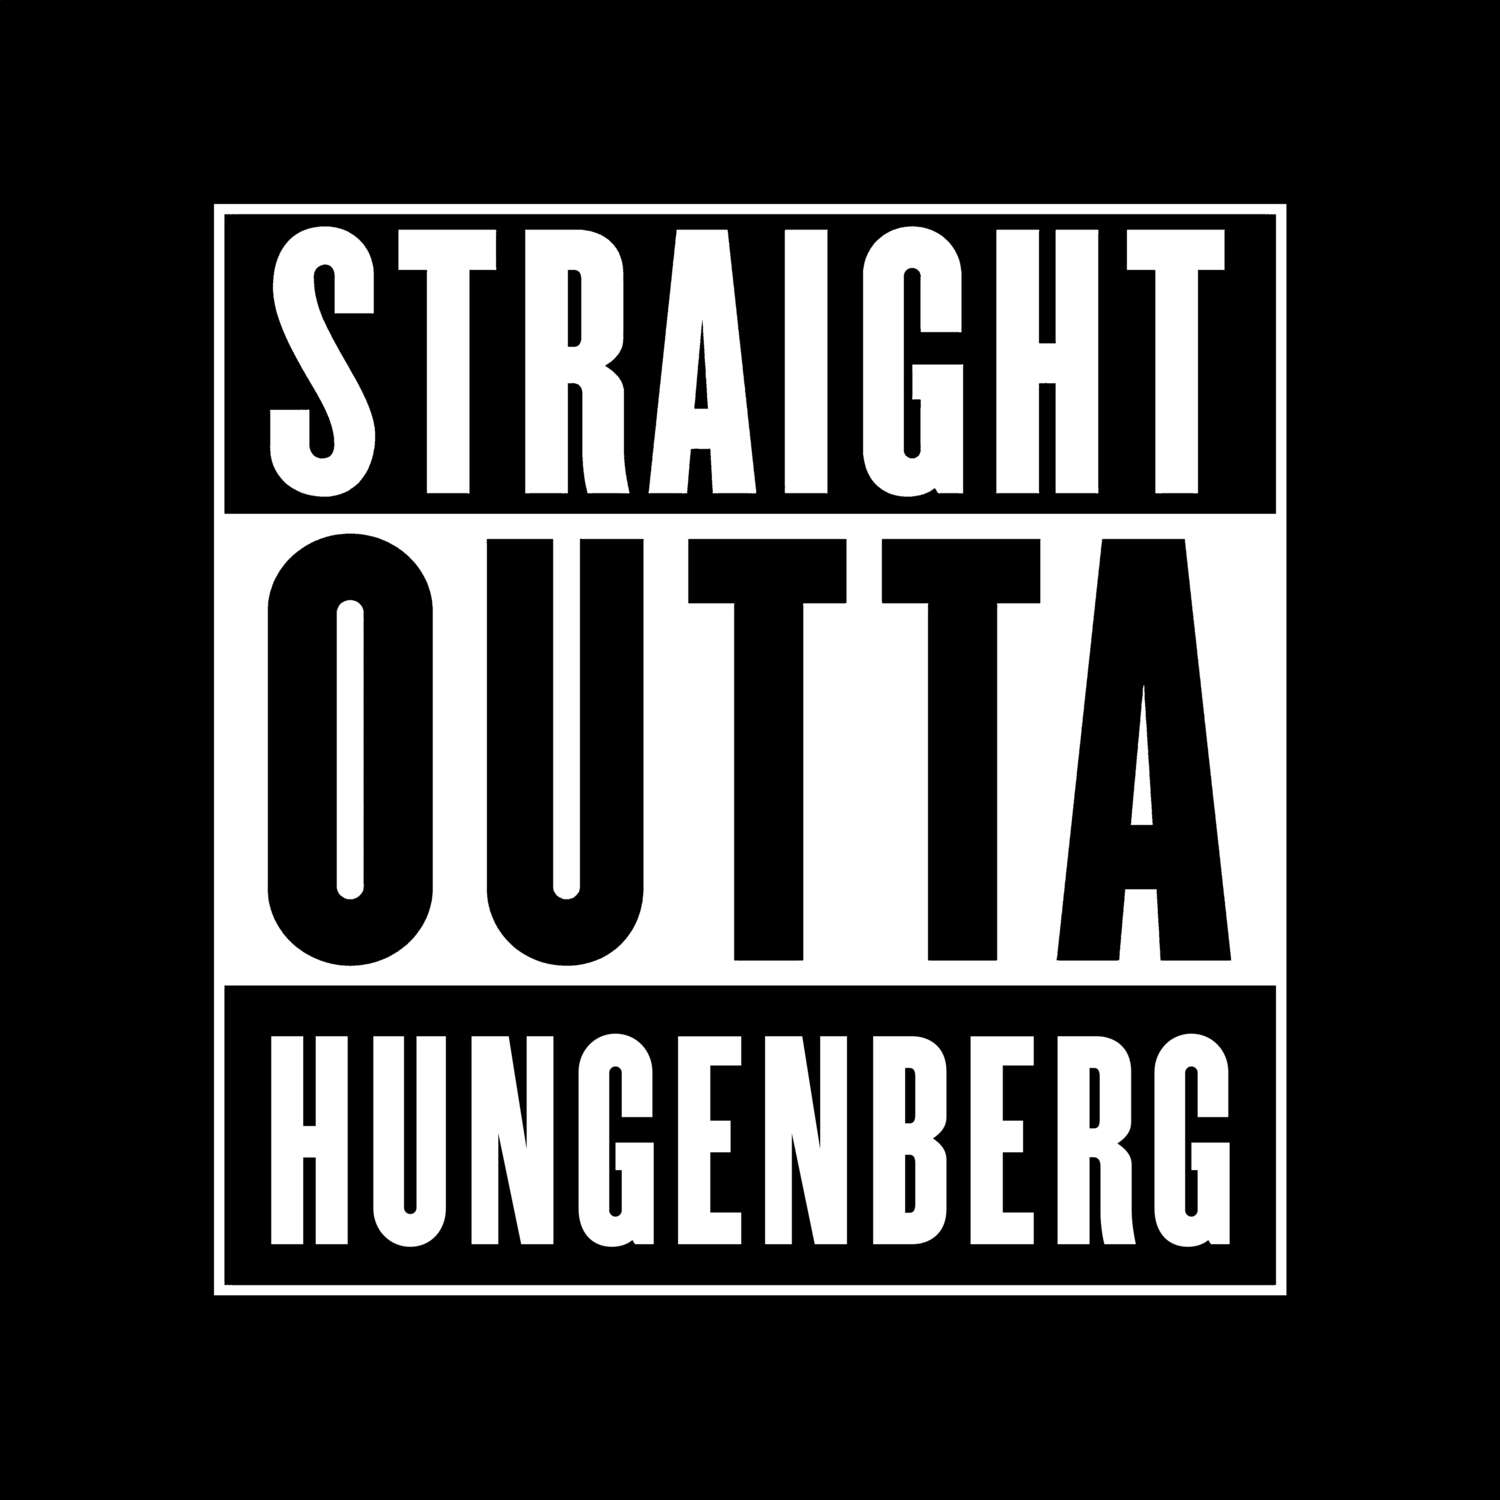 Hungenberg T-Shirt »Straight Outta«